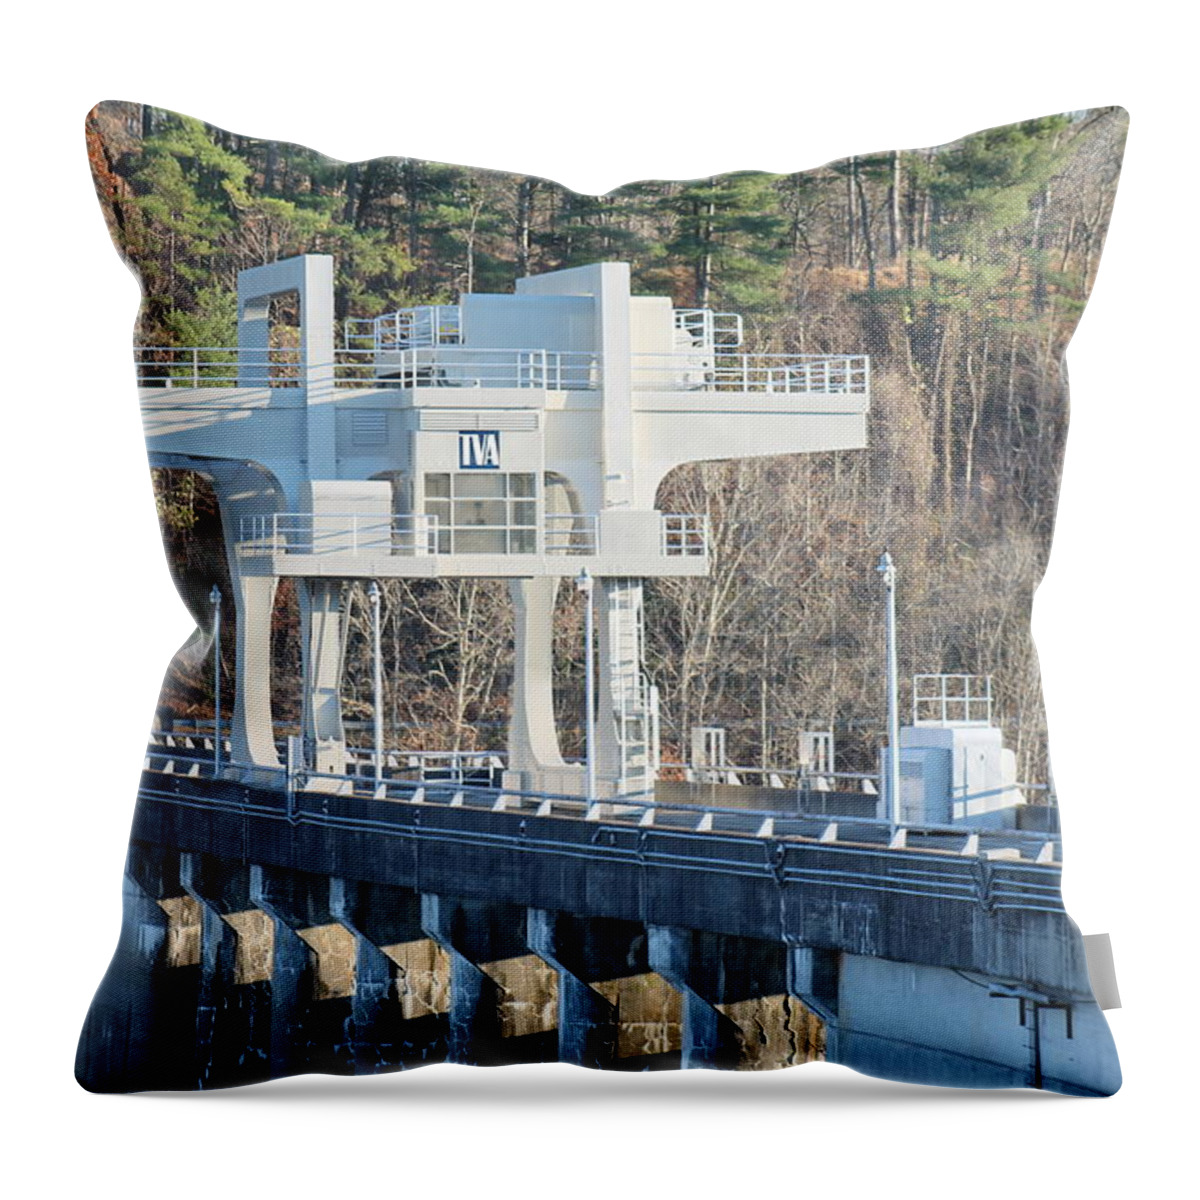 Tva Throw Pillow featuring the photograph TVA Hiwassee Bridge In North Carolina by Robin Vargo